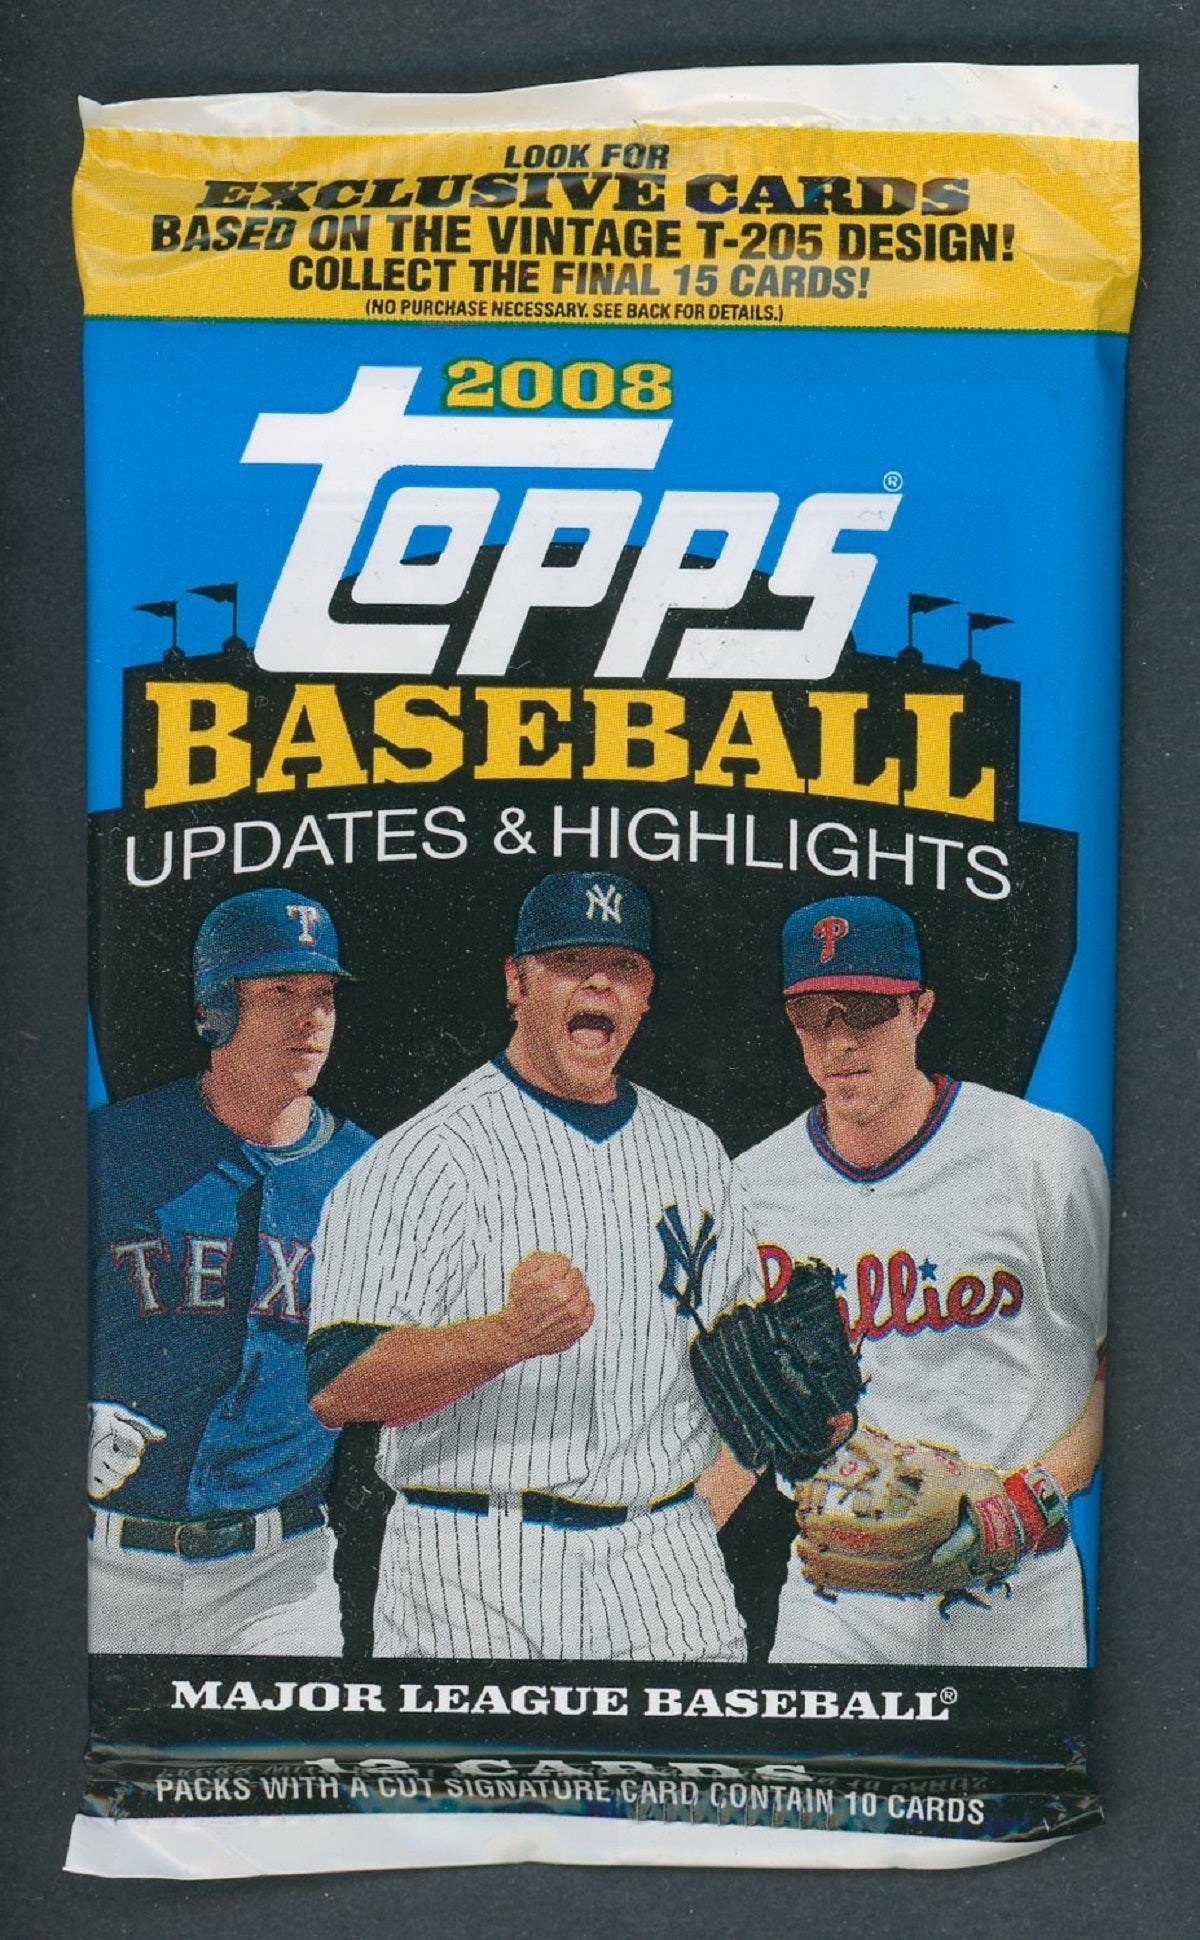 2008 Topps Baseball Updates Highlights Unopened Pack (Target)